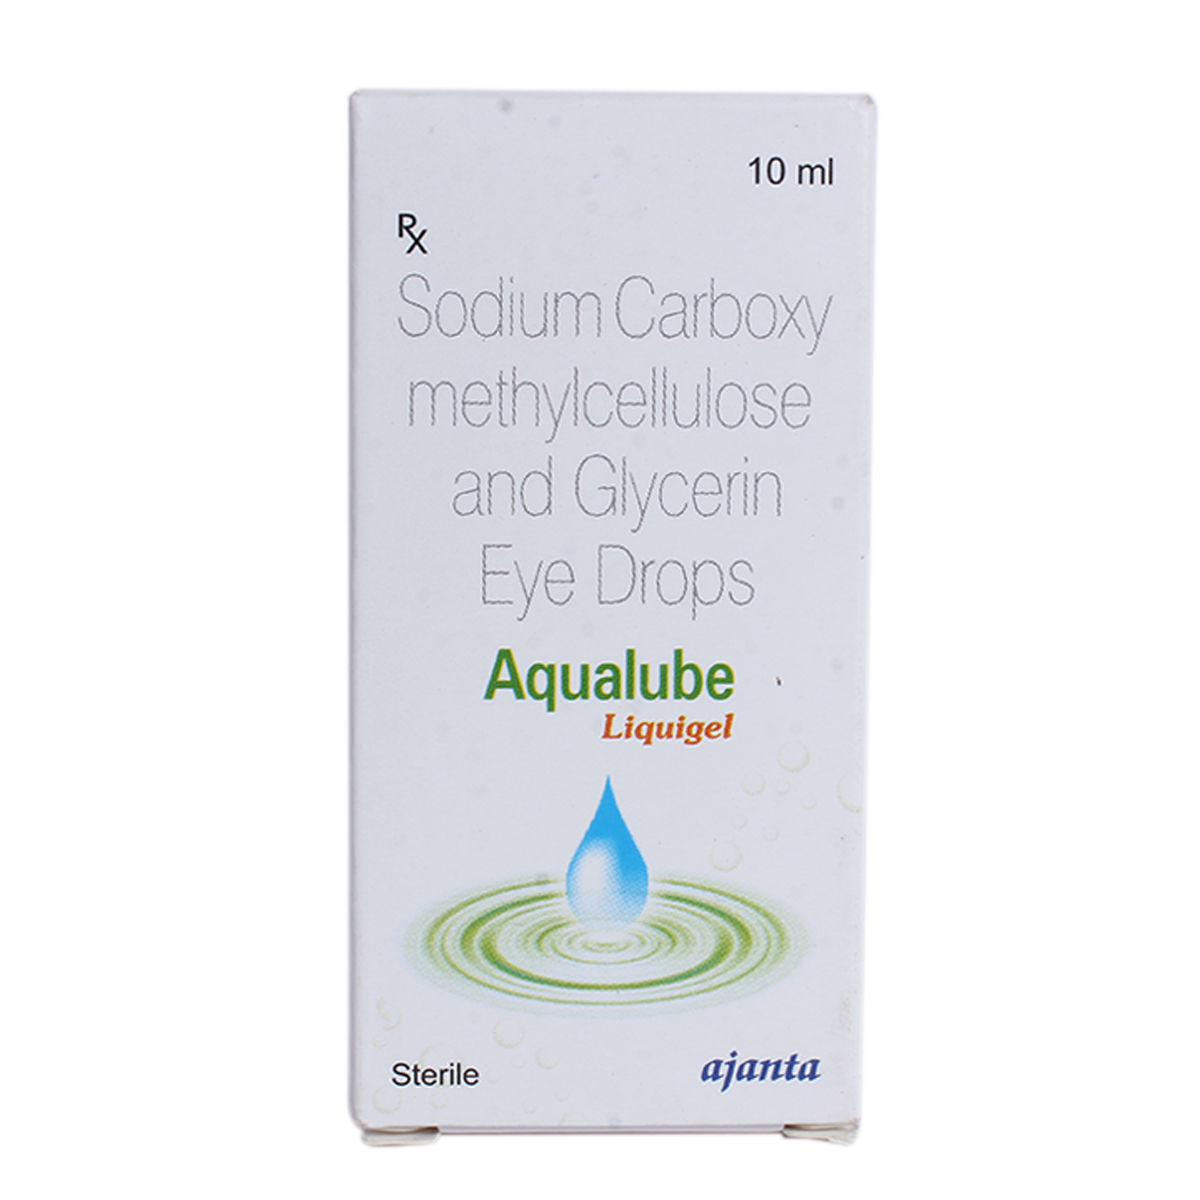 Buy Aqualube Liquigel 10 ml Online